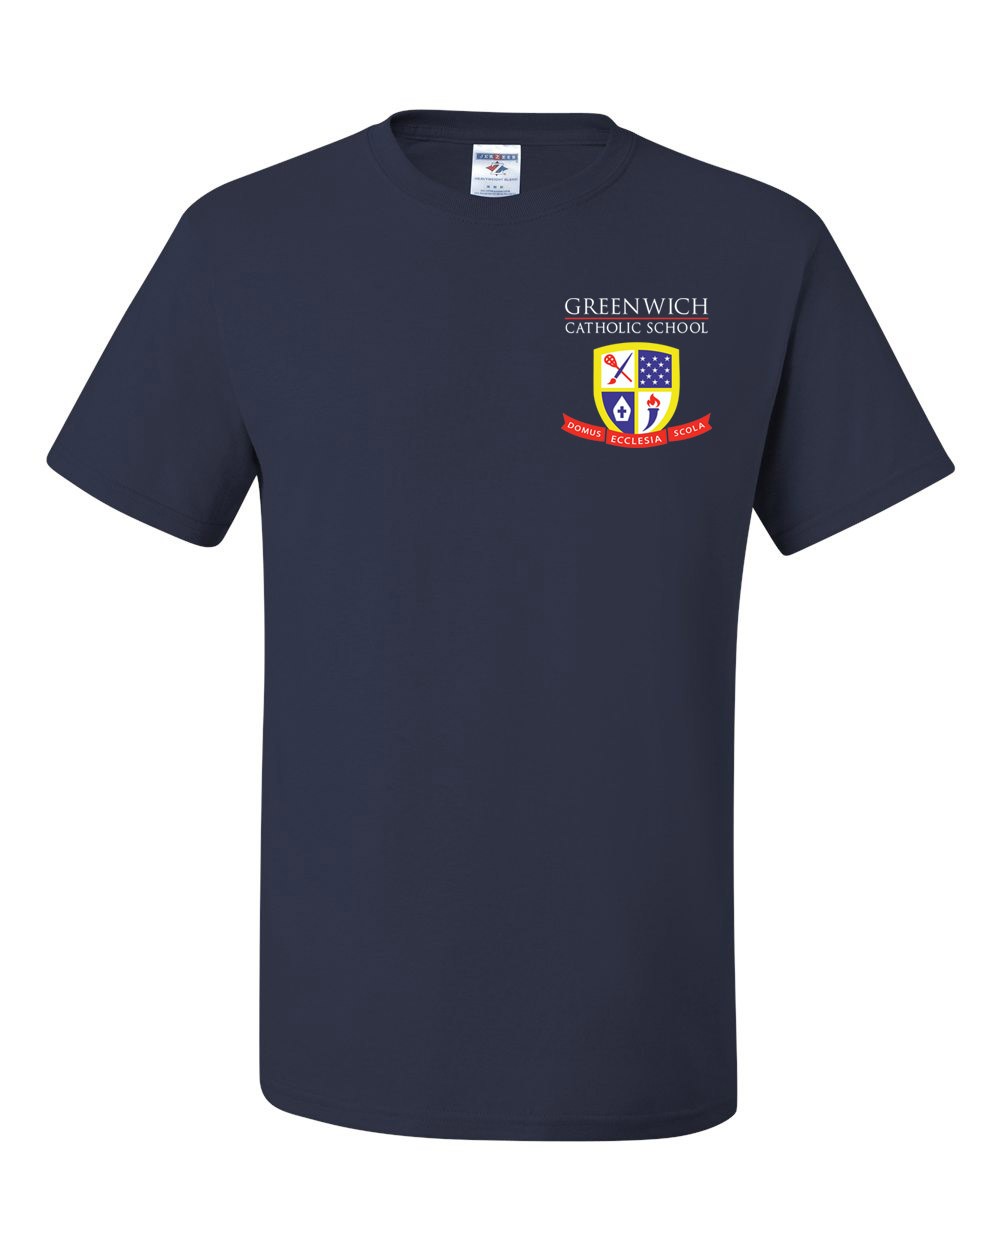 GCS S/S Gym T-Shirt w/ School Logo